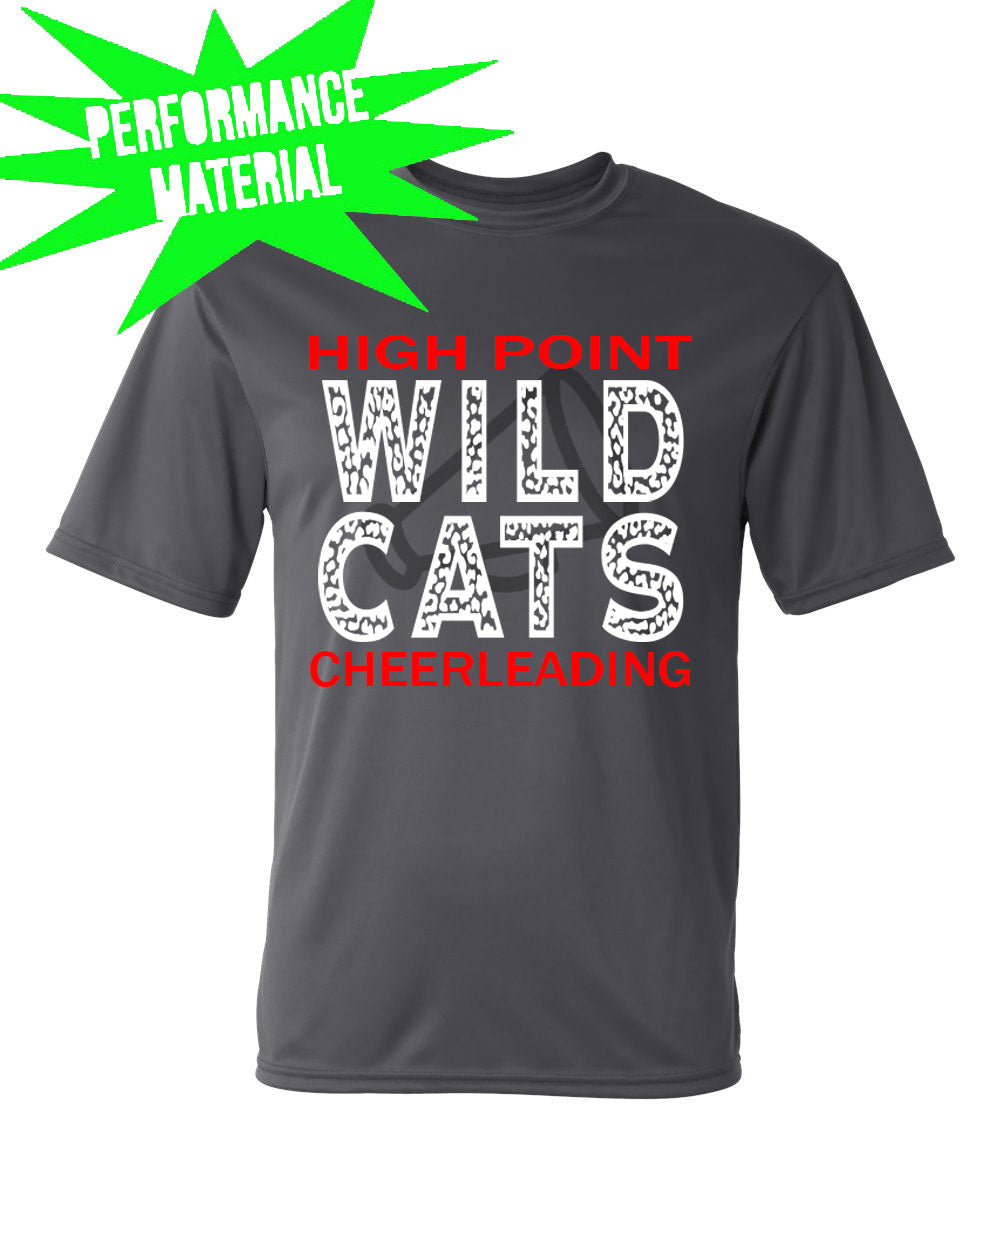 Wildcats Cheer Performance Material design 1 T-Shirt